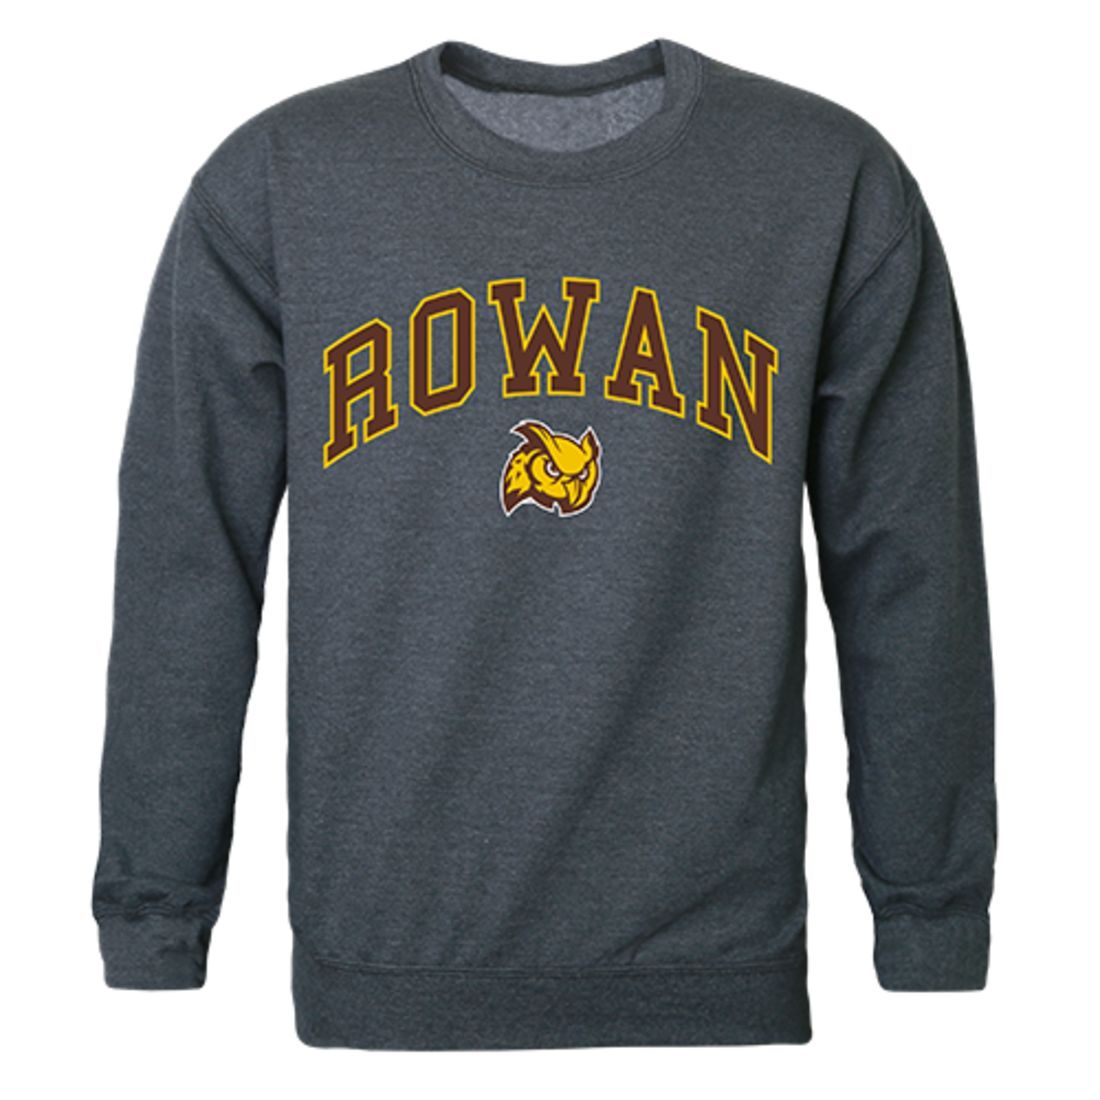 Rowan University Campus Crewneck Pullover Sweatshirt Sweater Heather Charcoal-Campus-Wardrobe